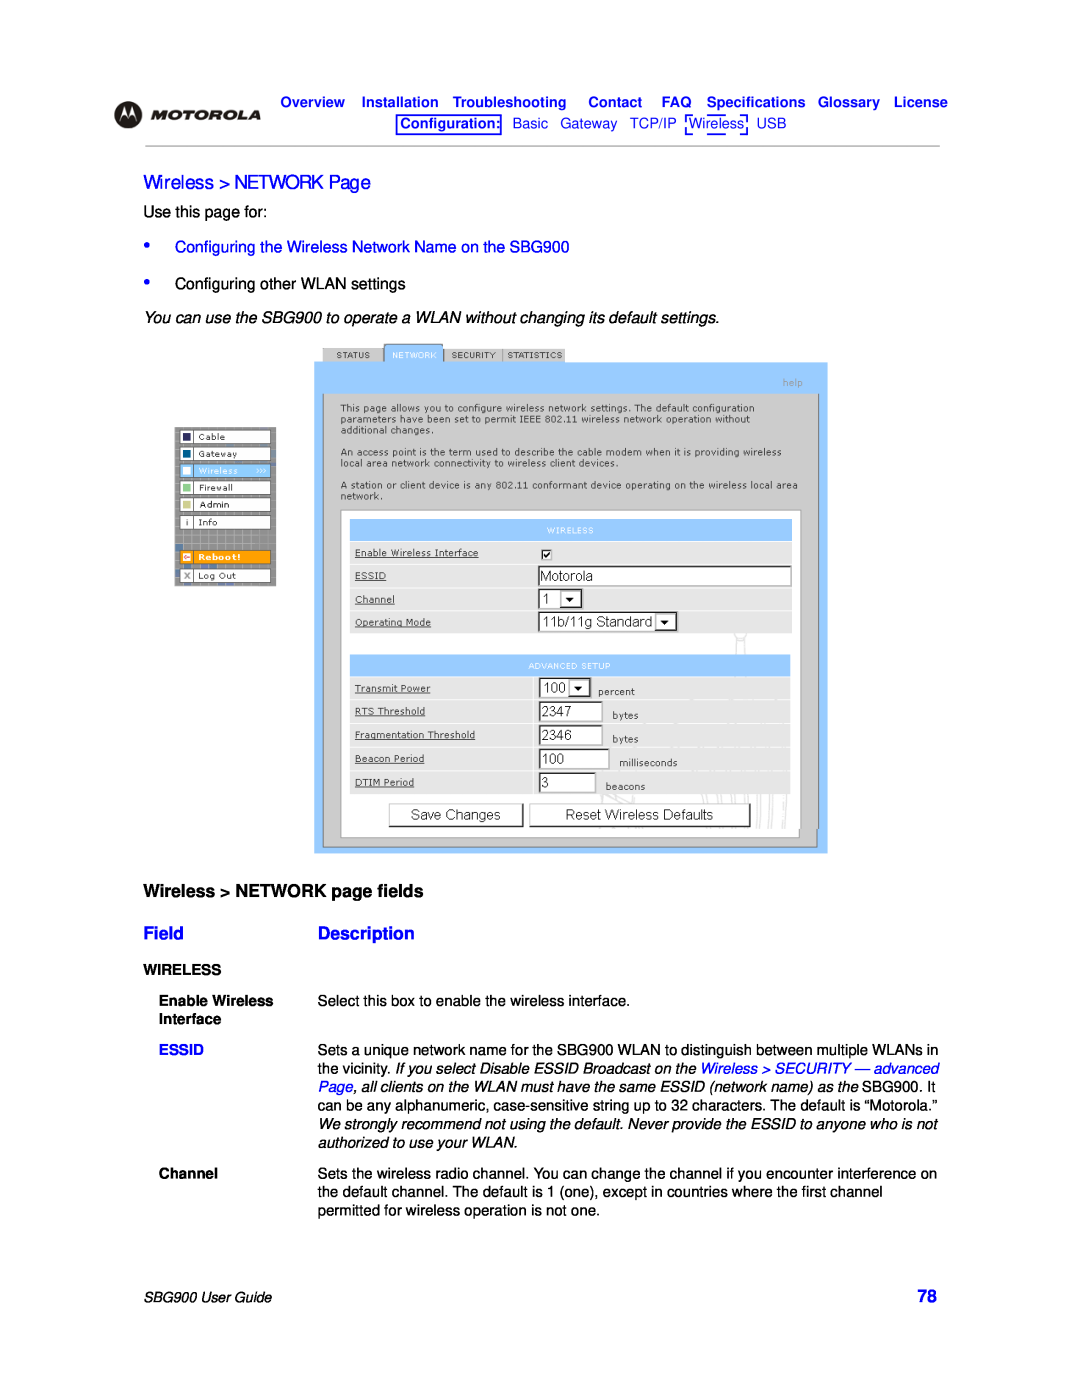 Motorola manual Wireless NETWORK Page, Wireless NETWORK page fields, Configuring the Wireless Network Name on the SBG900 